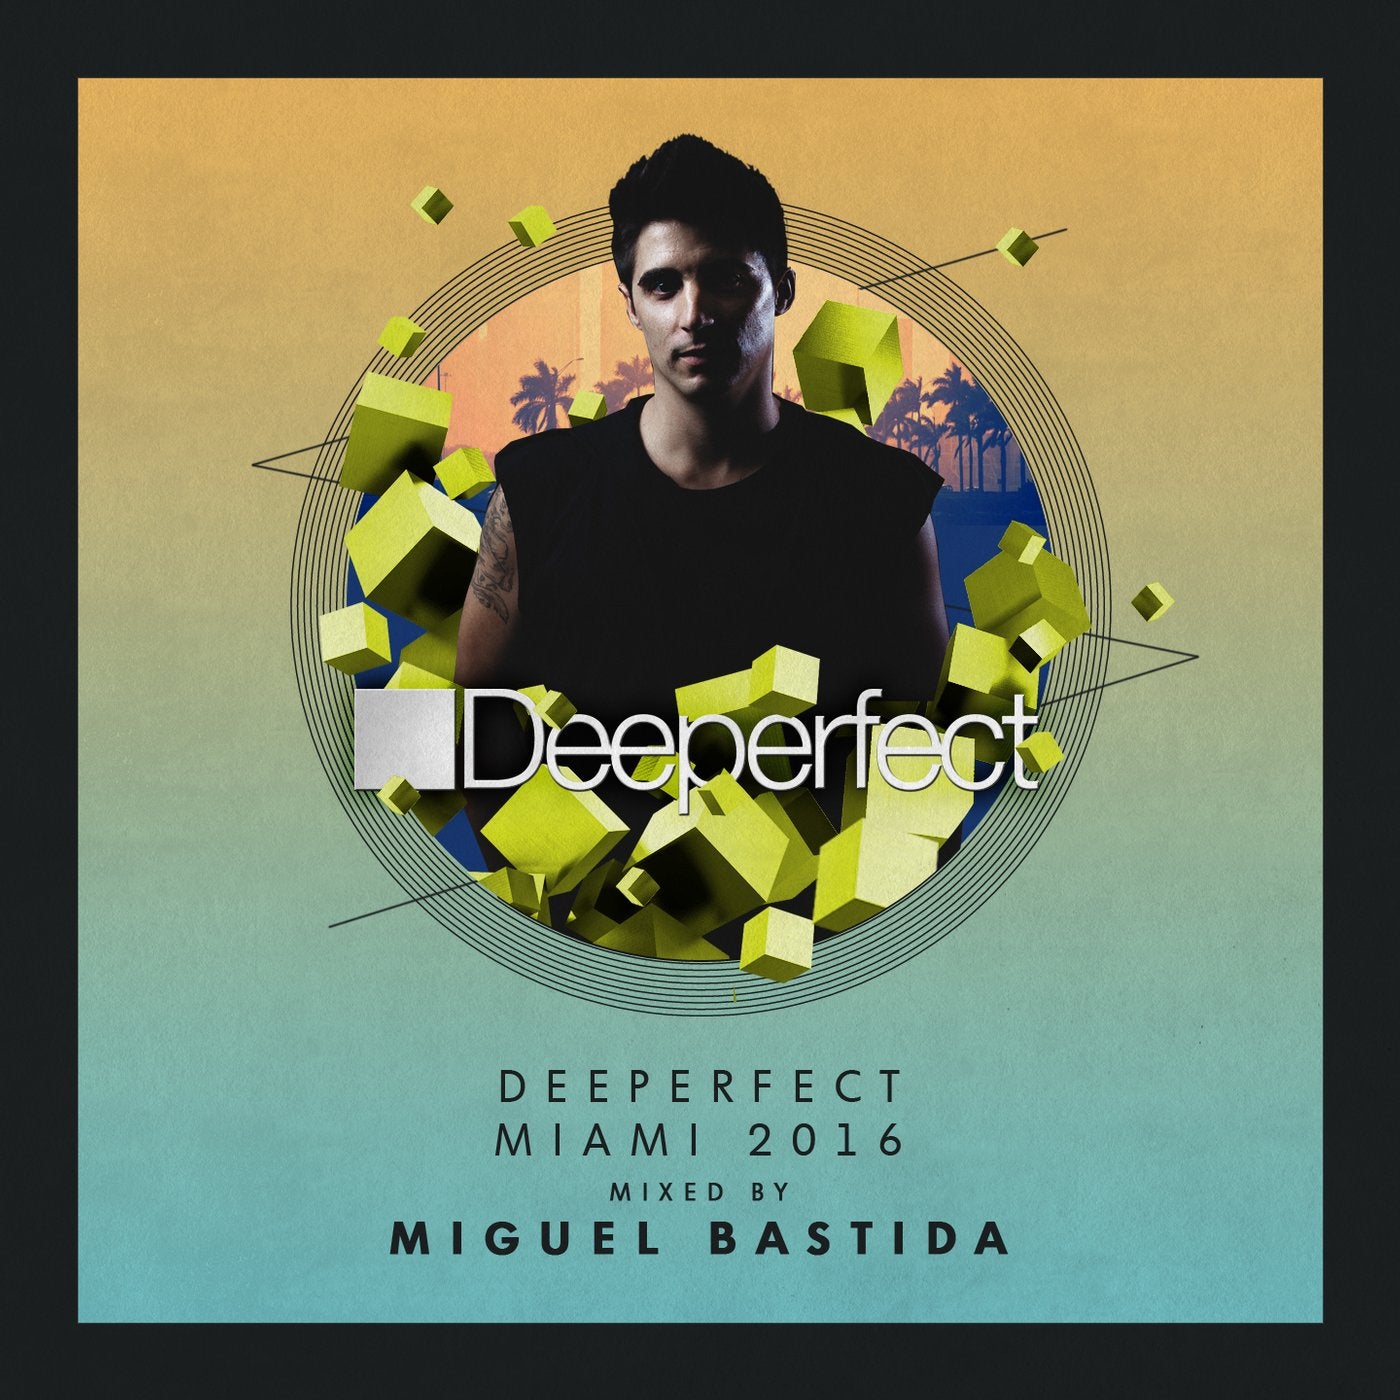 Deeperfect Miami 2016 Mixed By Miguel Bastida